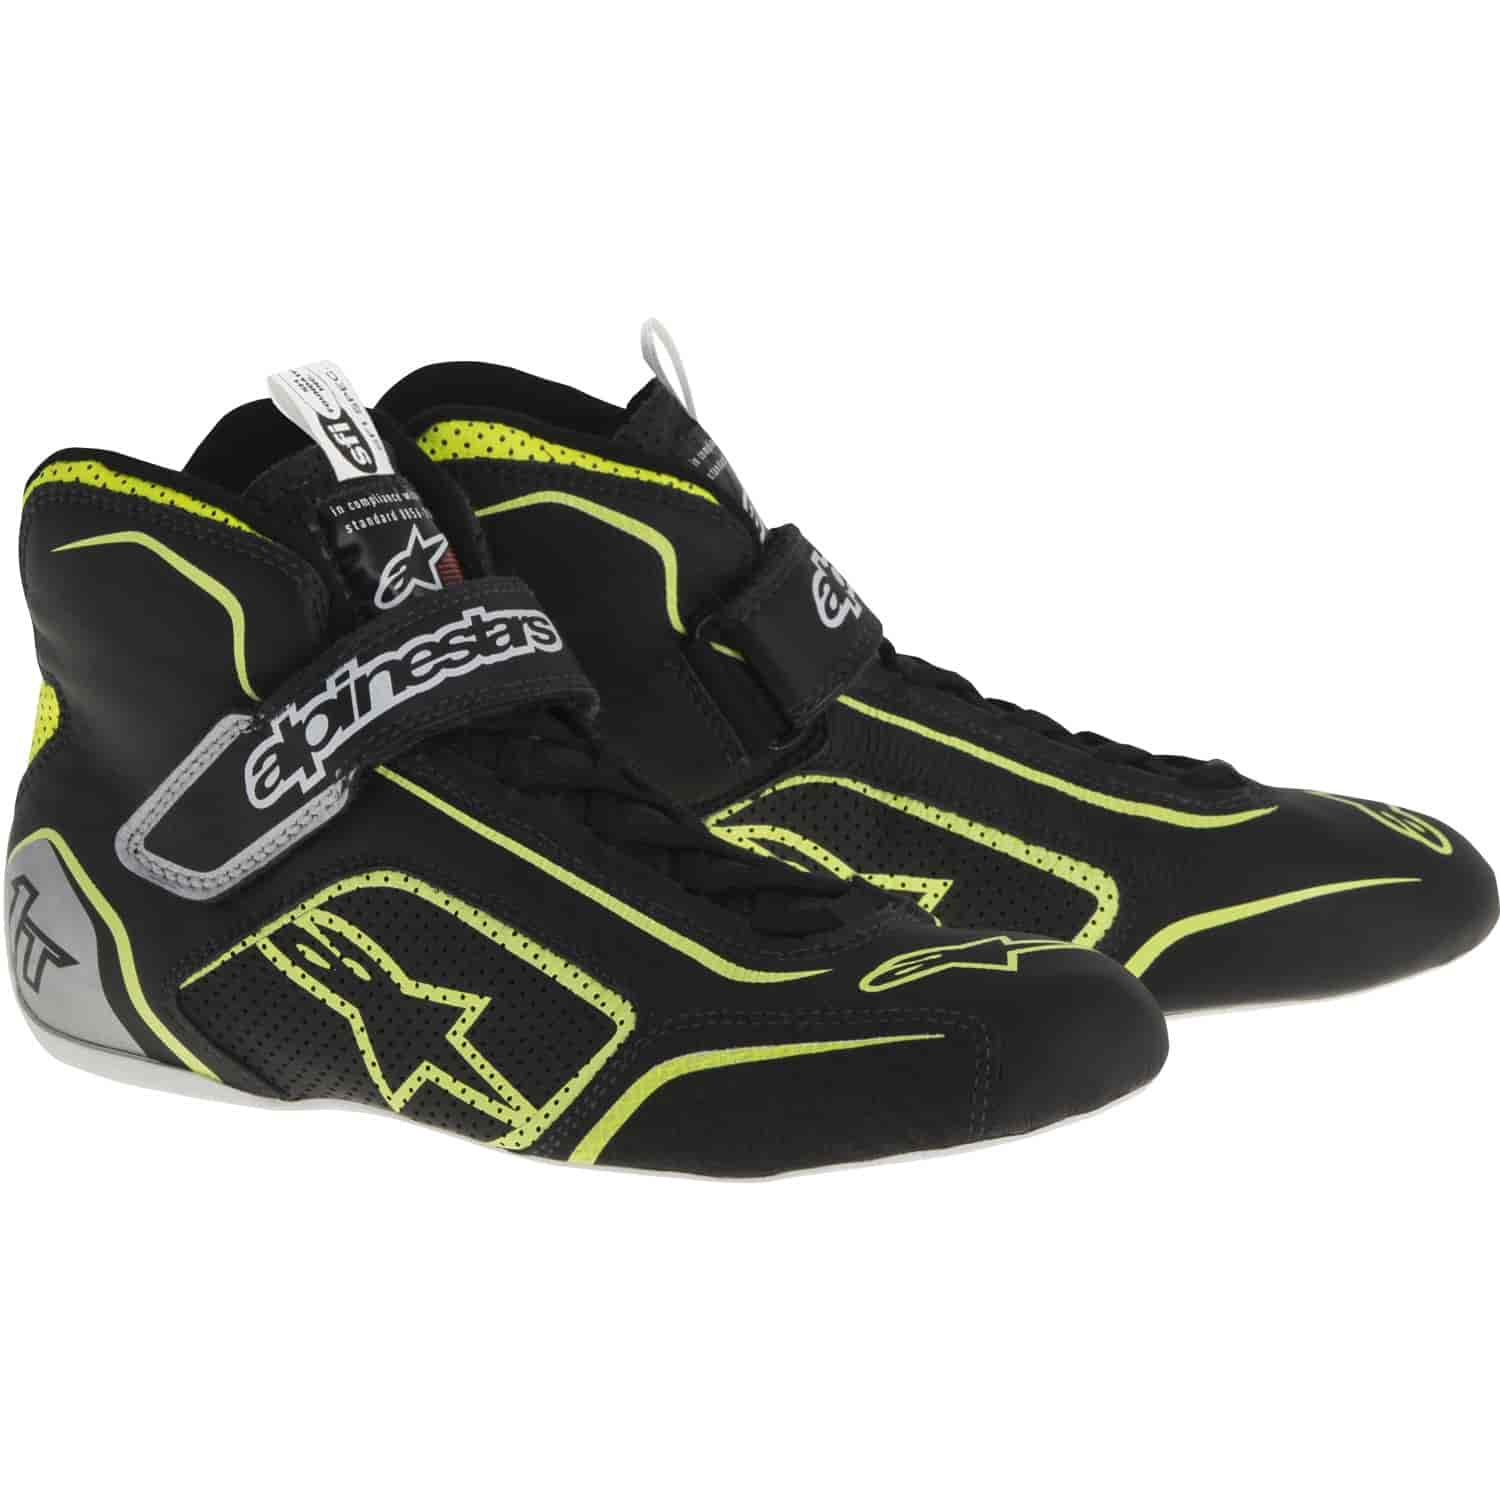 Tech 1-T Shoes Black/Fluorescent Yellow SFI 3.3/5